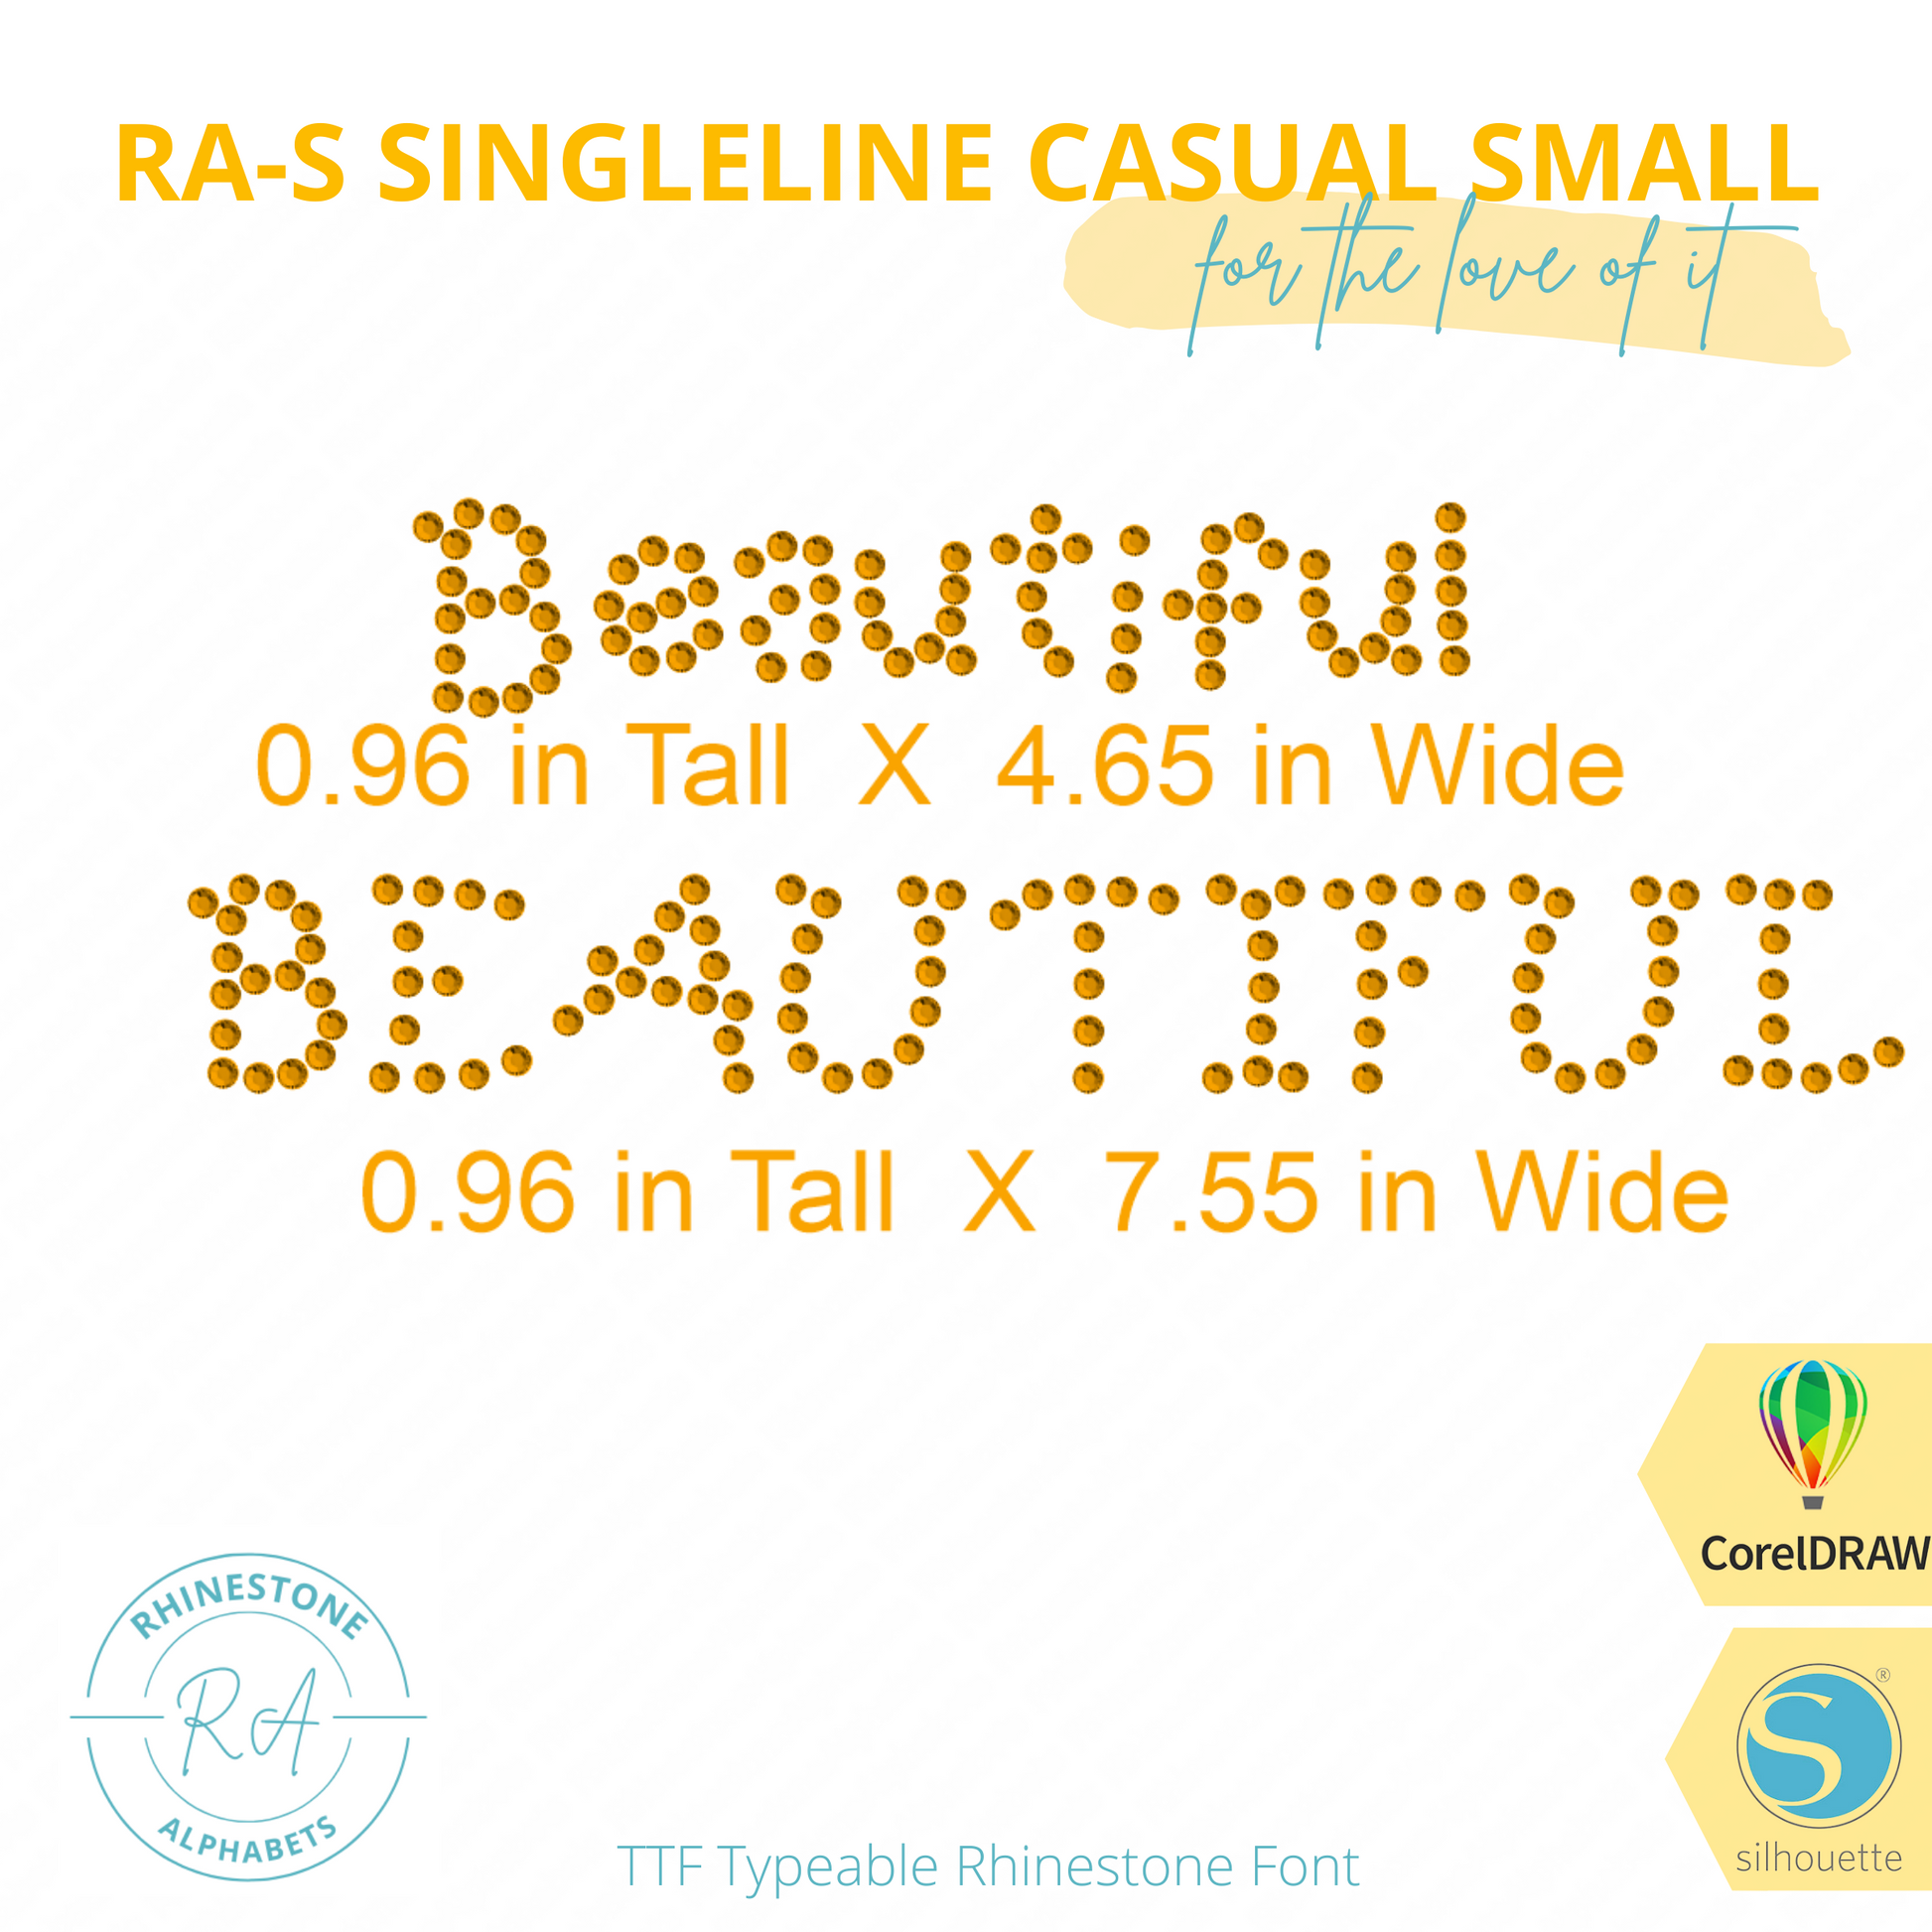 RA-S Singleline Casual Small - RhinestoneAlphabets